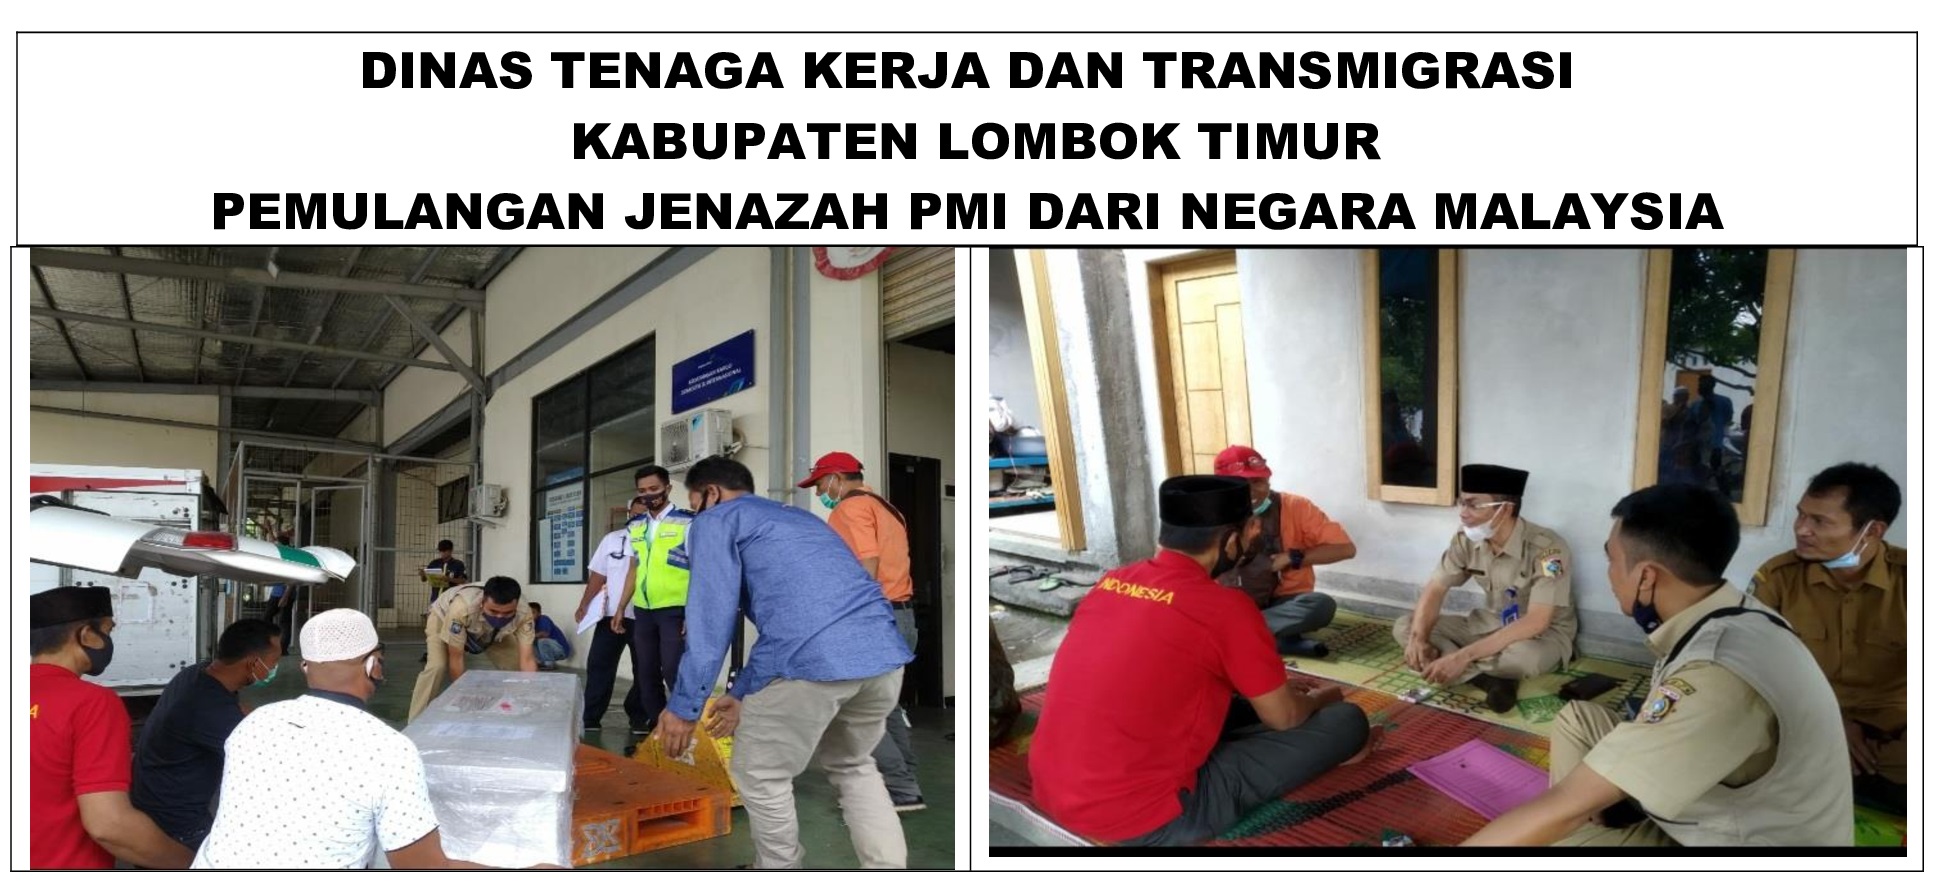 Disnakertrans Kab. Lotim Melakukan Penjemputan Jenazah Pekerja Migran Indonesia Asal Mamben Lauk Kab.Lotim Yang Meninggal Di Negara Malaysia